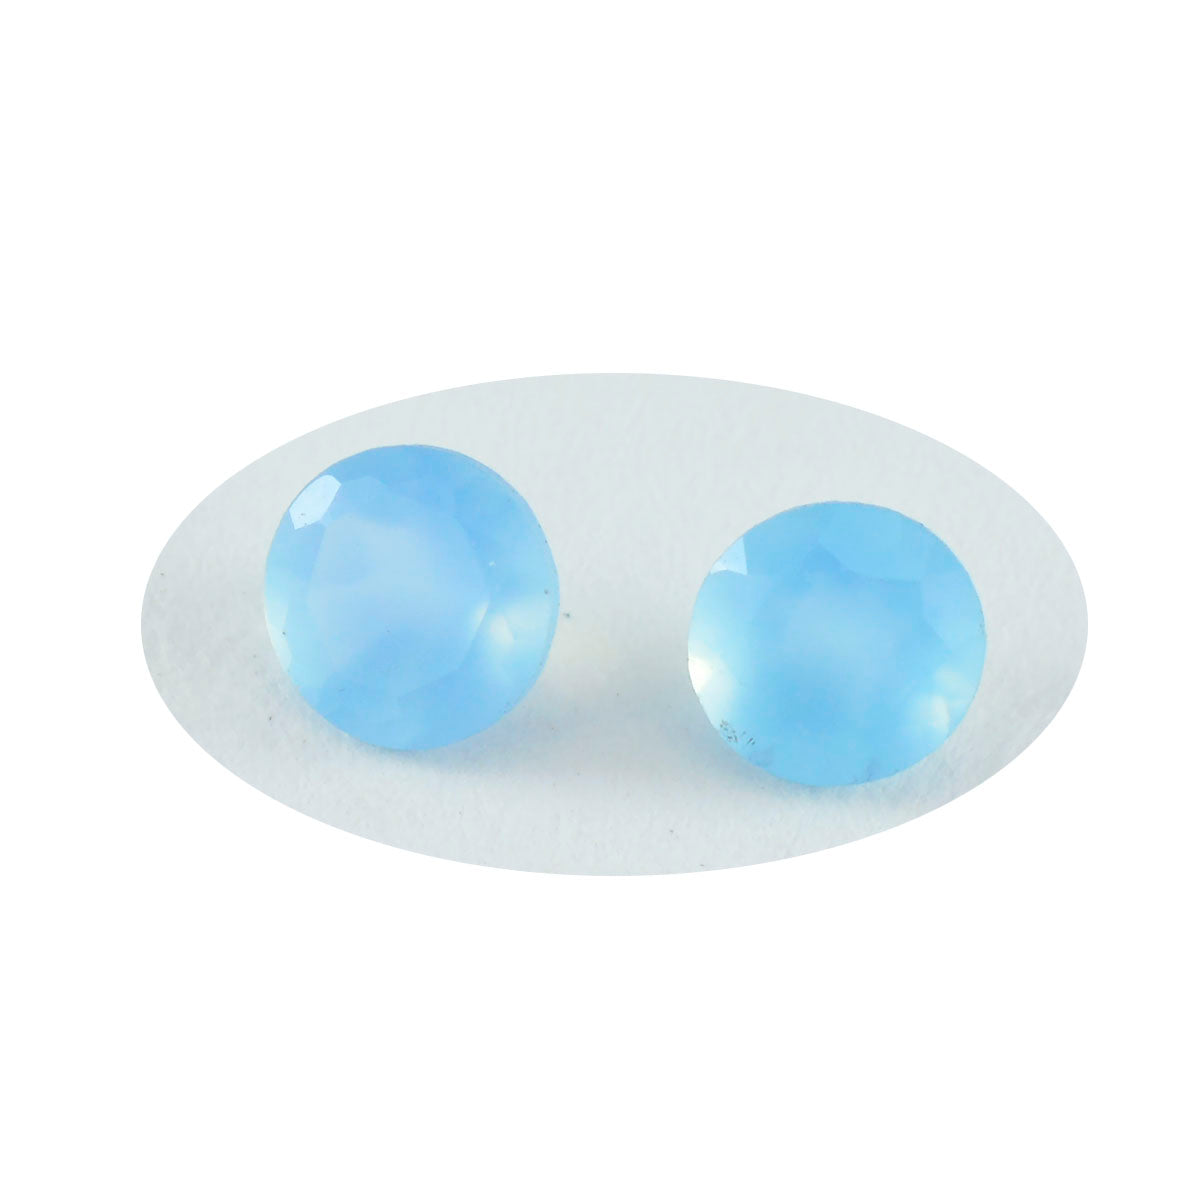 Riyogems 1PC Natural Blue Chalcedony Faceted 6x6 mm Round Shape wonderful Quality Gems